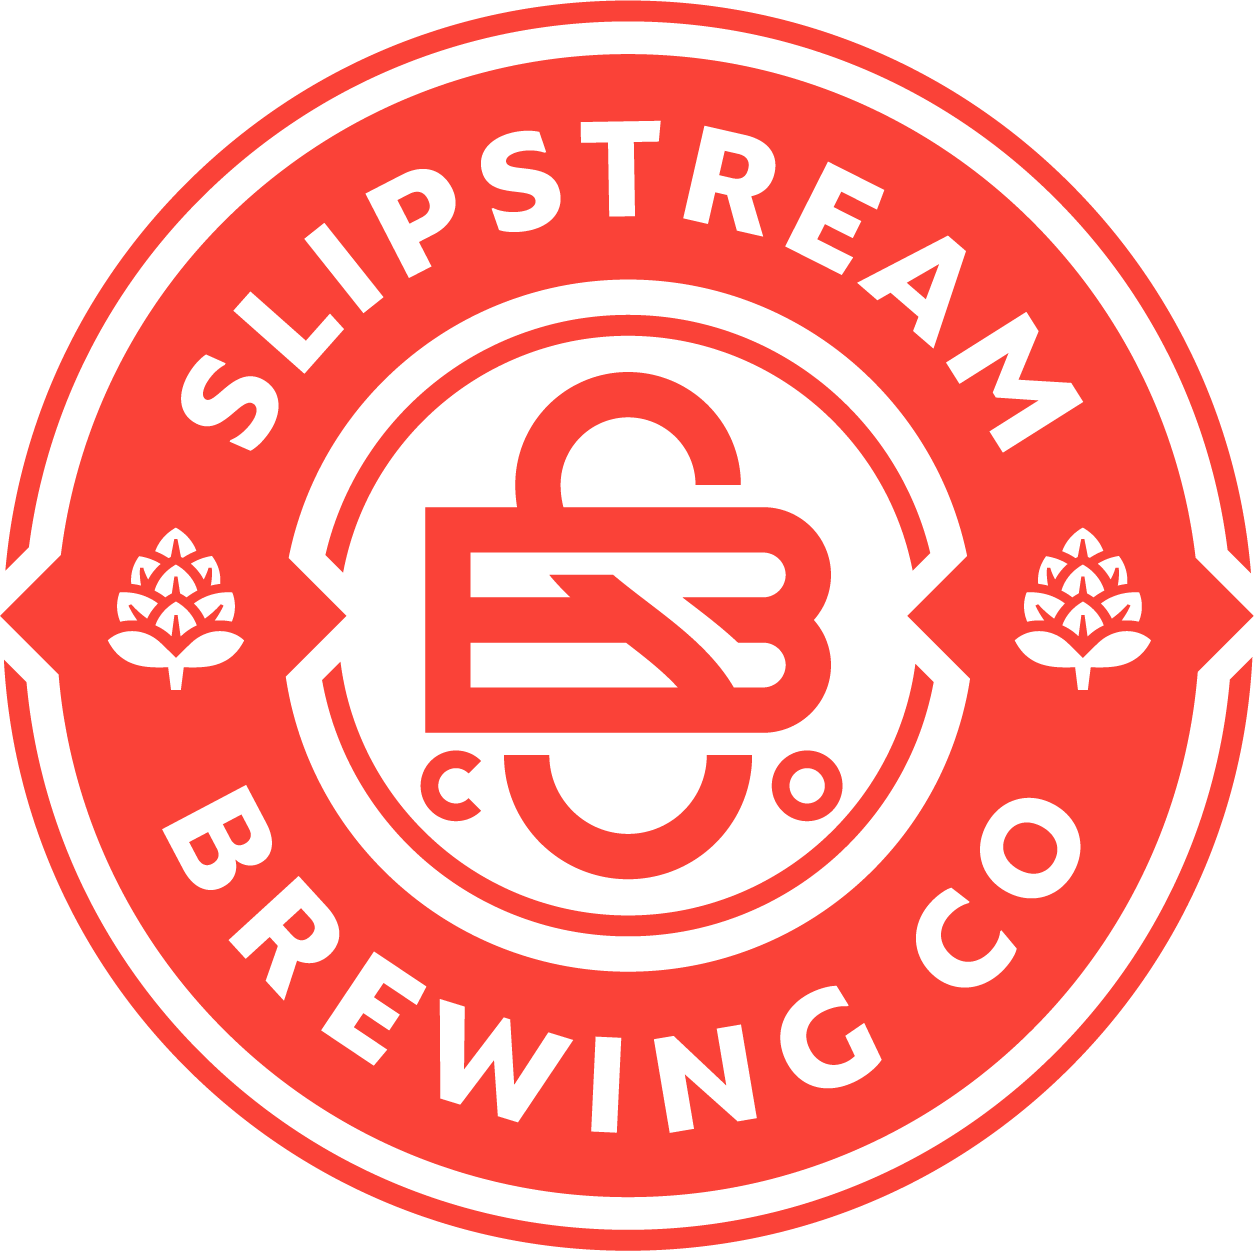 Slipstream Brewing Co